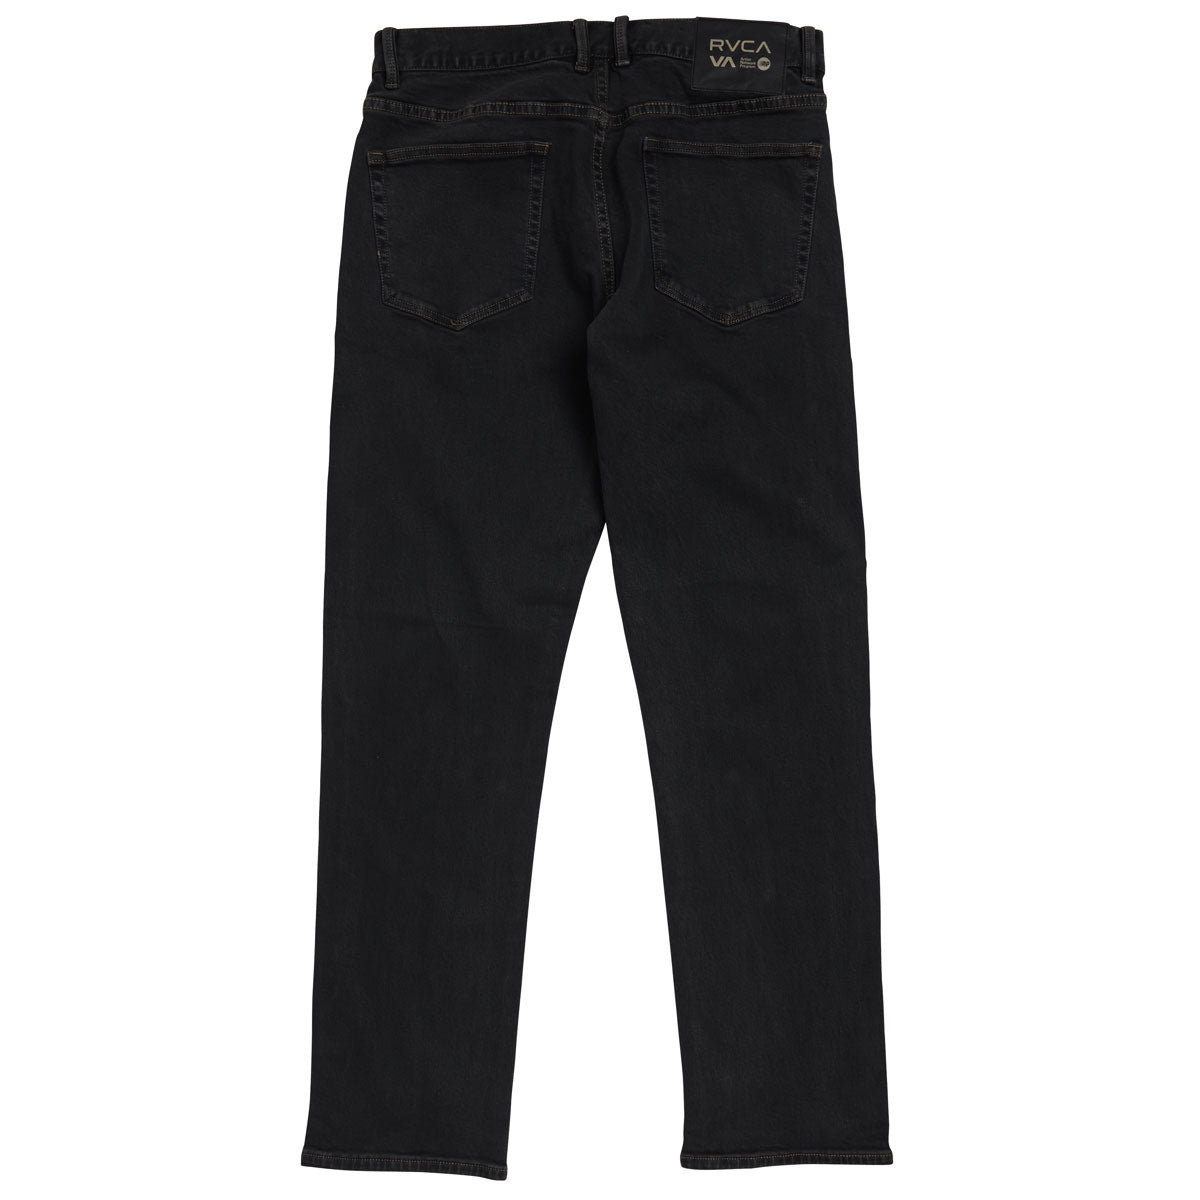 RVCA Weekend Anp Denim Jeans - Black Overdye image 2